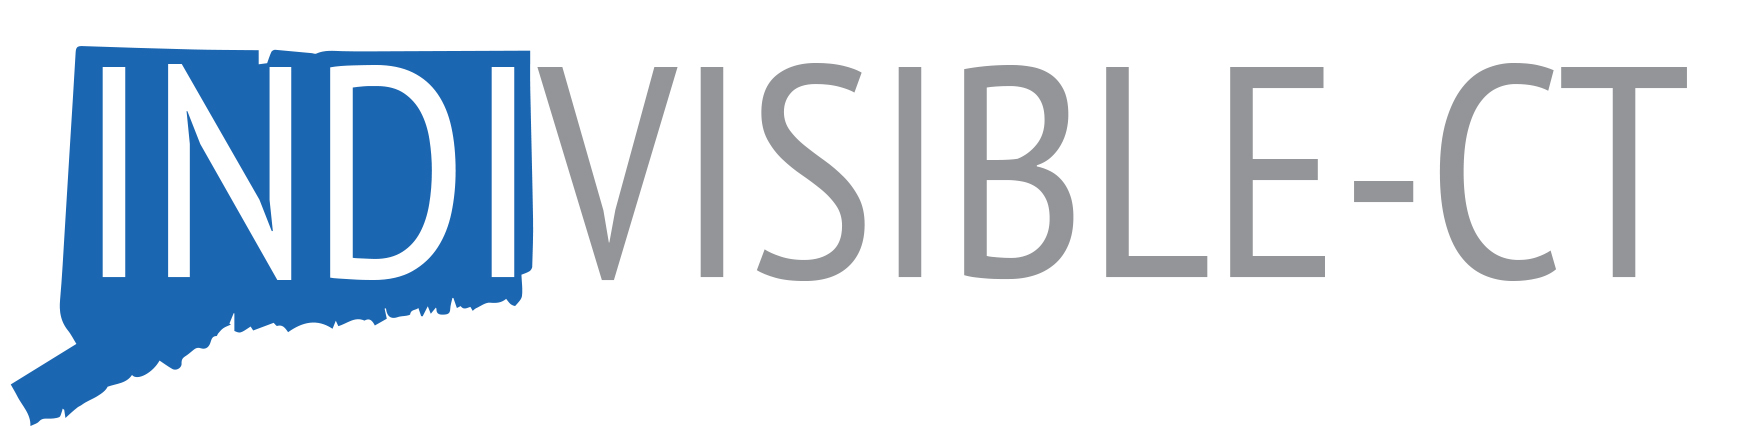 Indivisible Logo